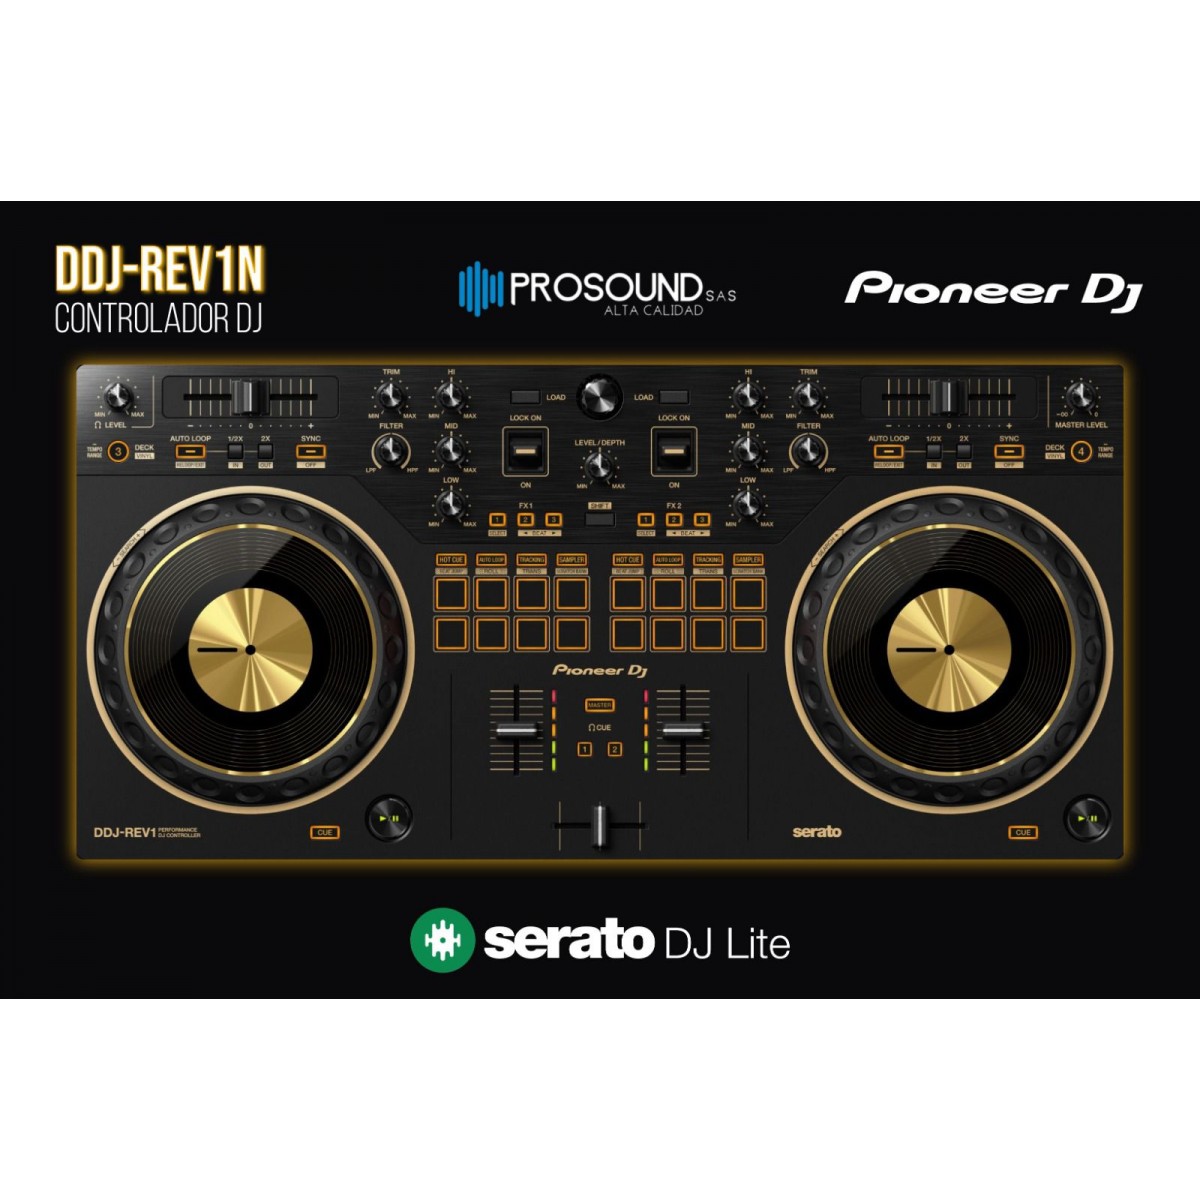 Head To Head: Pioneer DJ DDJ-REV1 Vs Pioneer DJ DDJ-400